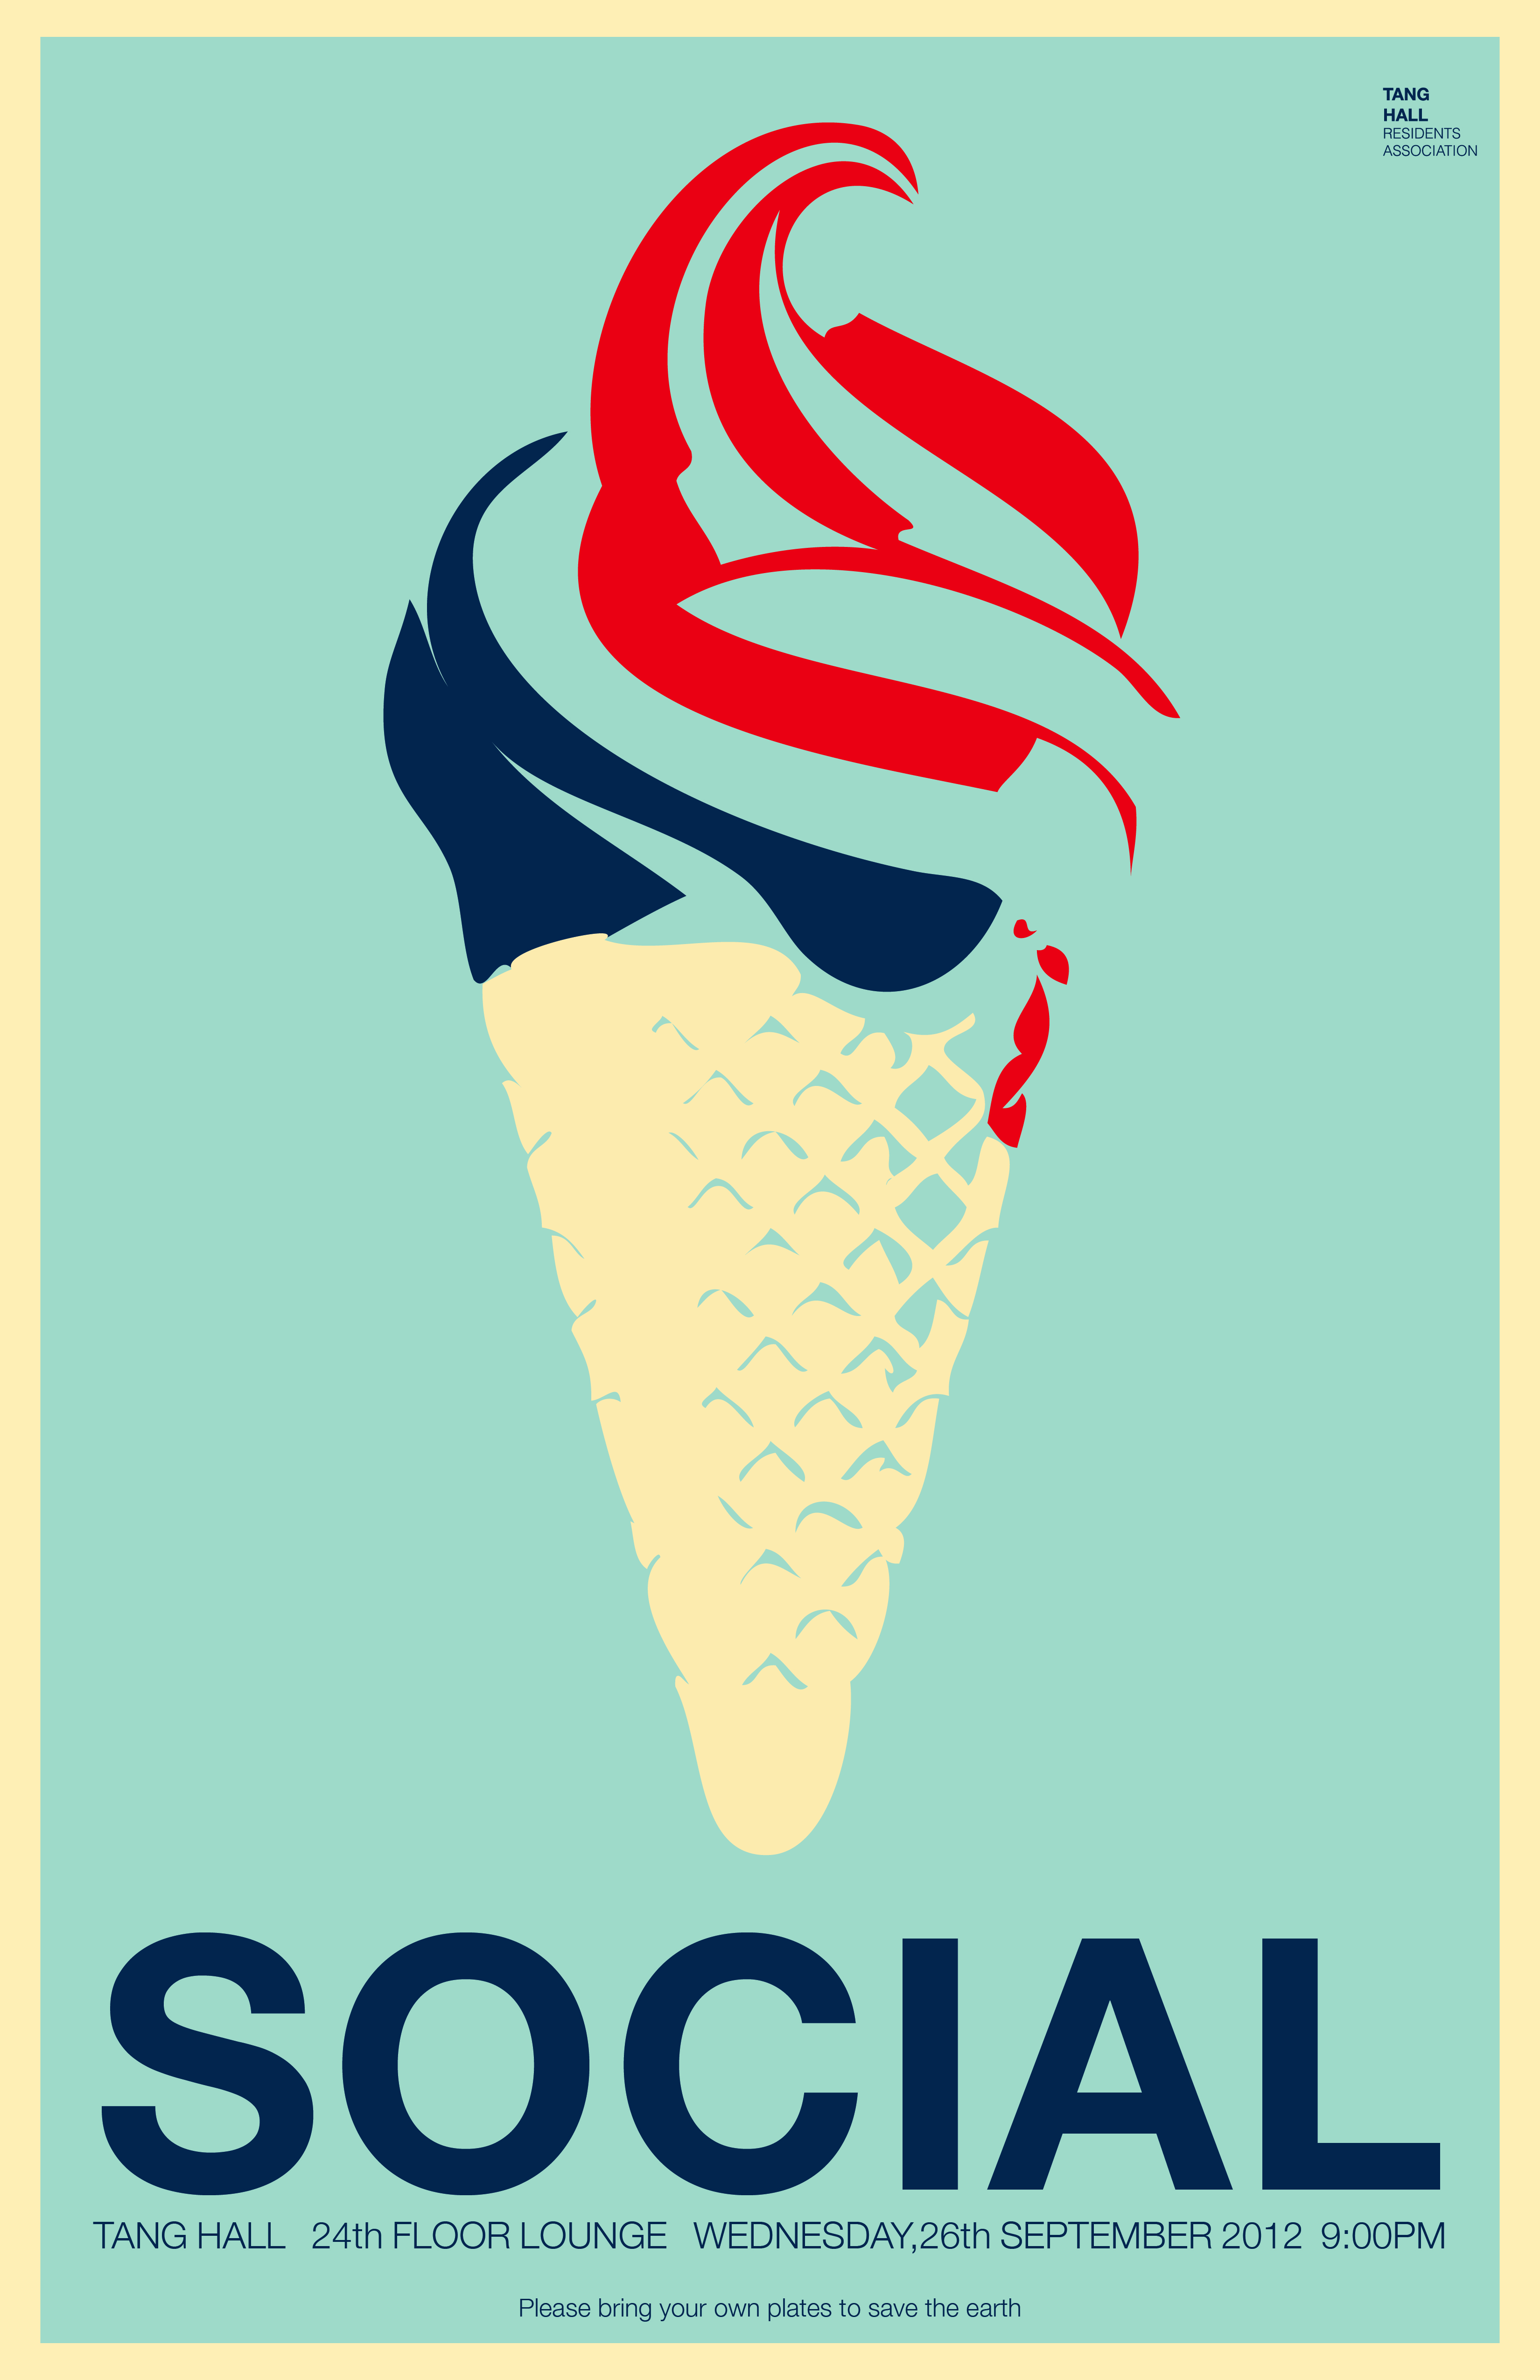 Ice Cream Social Images